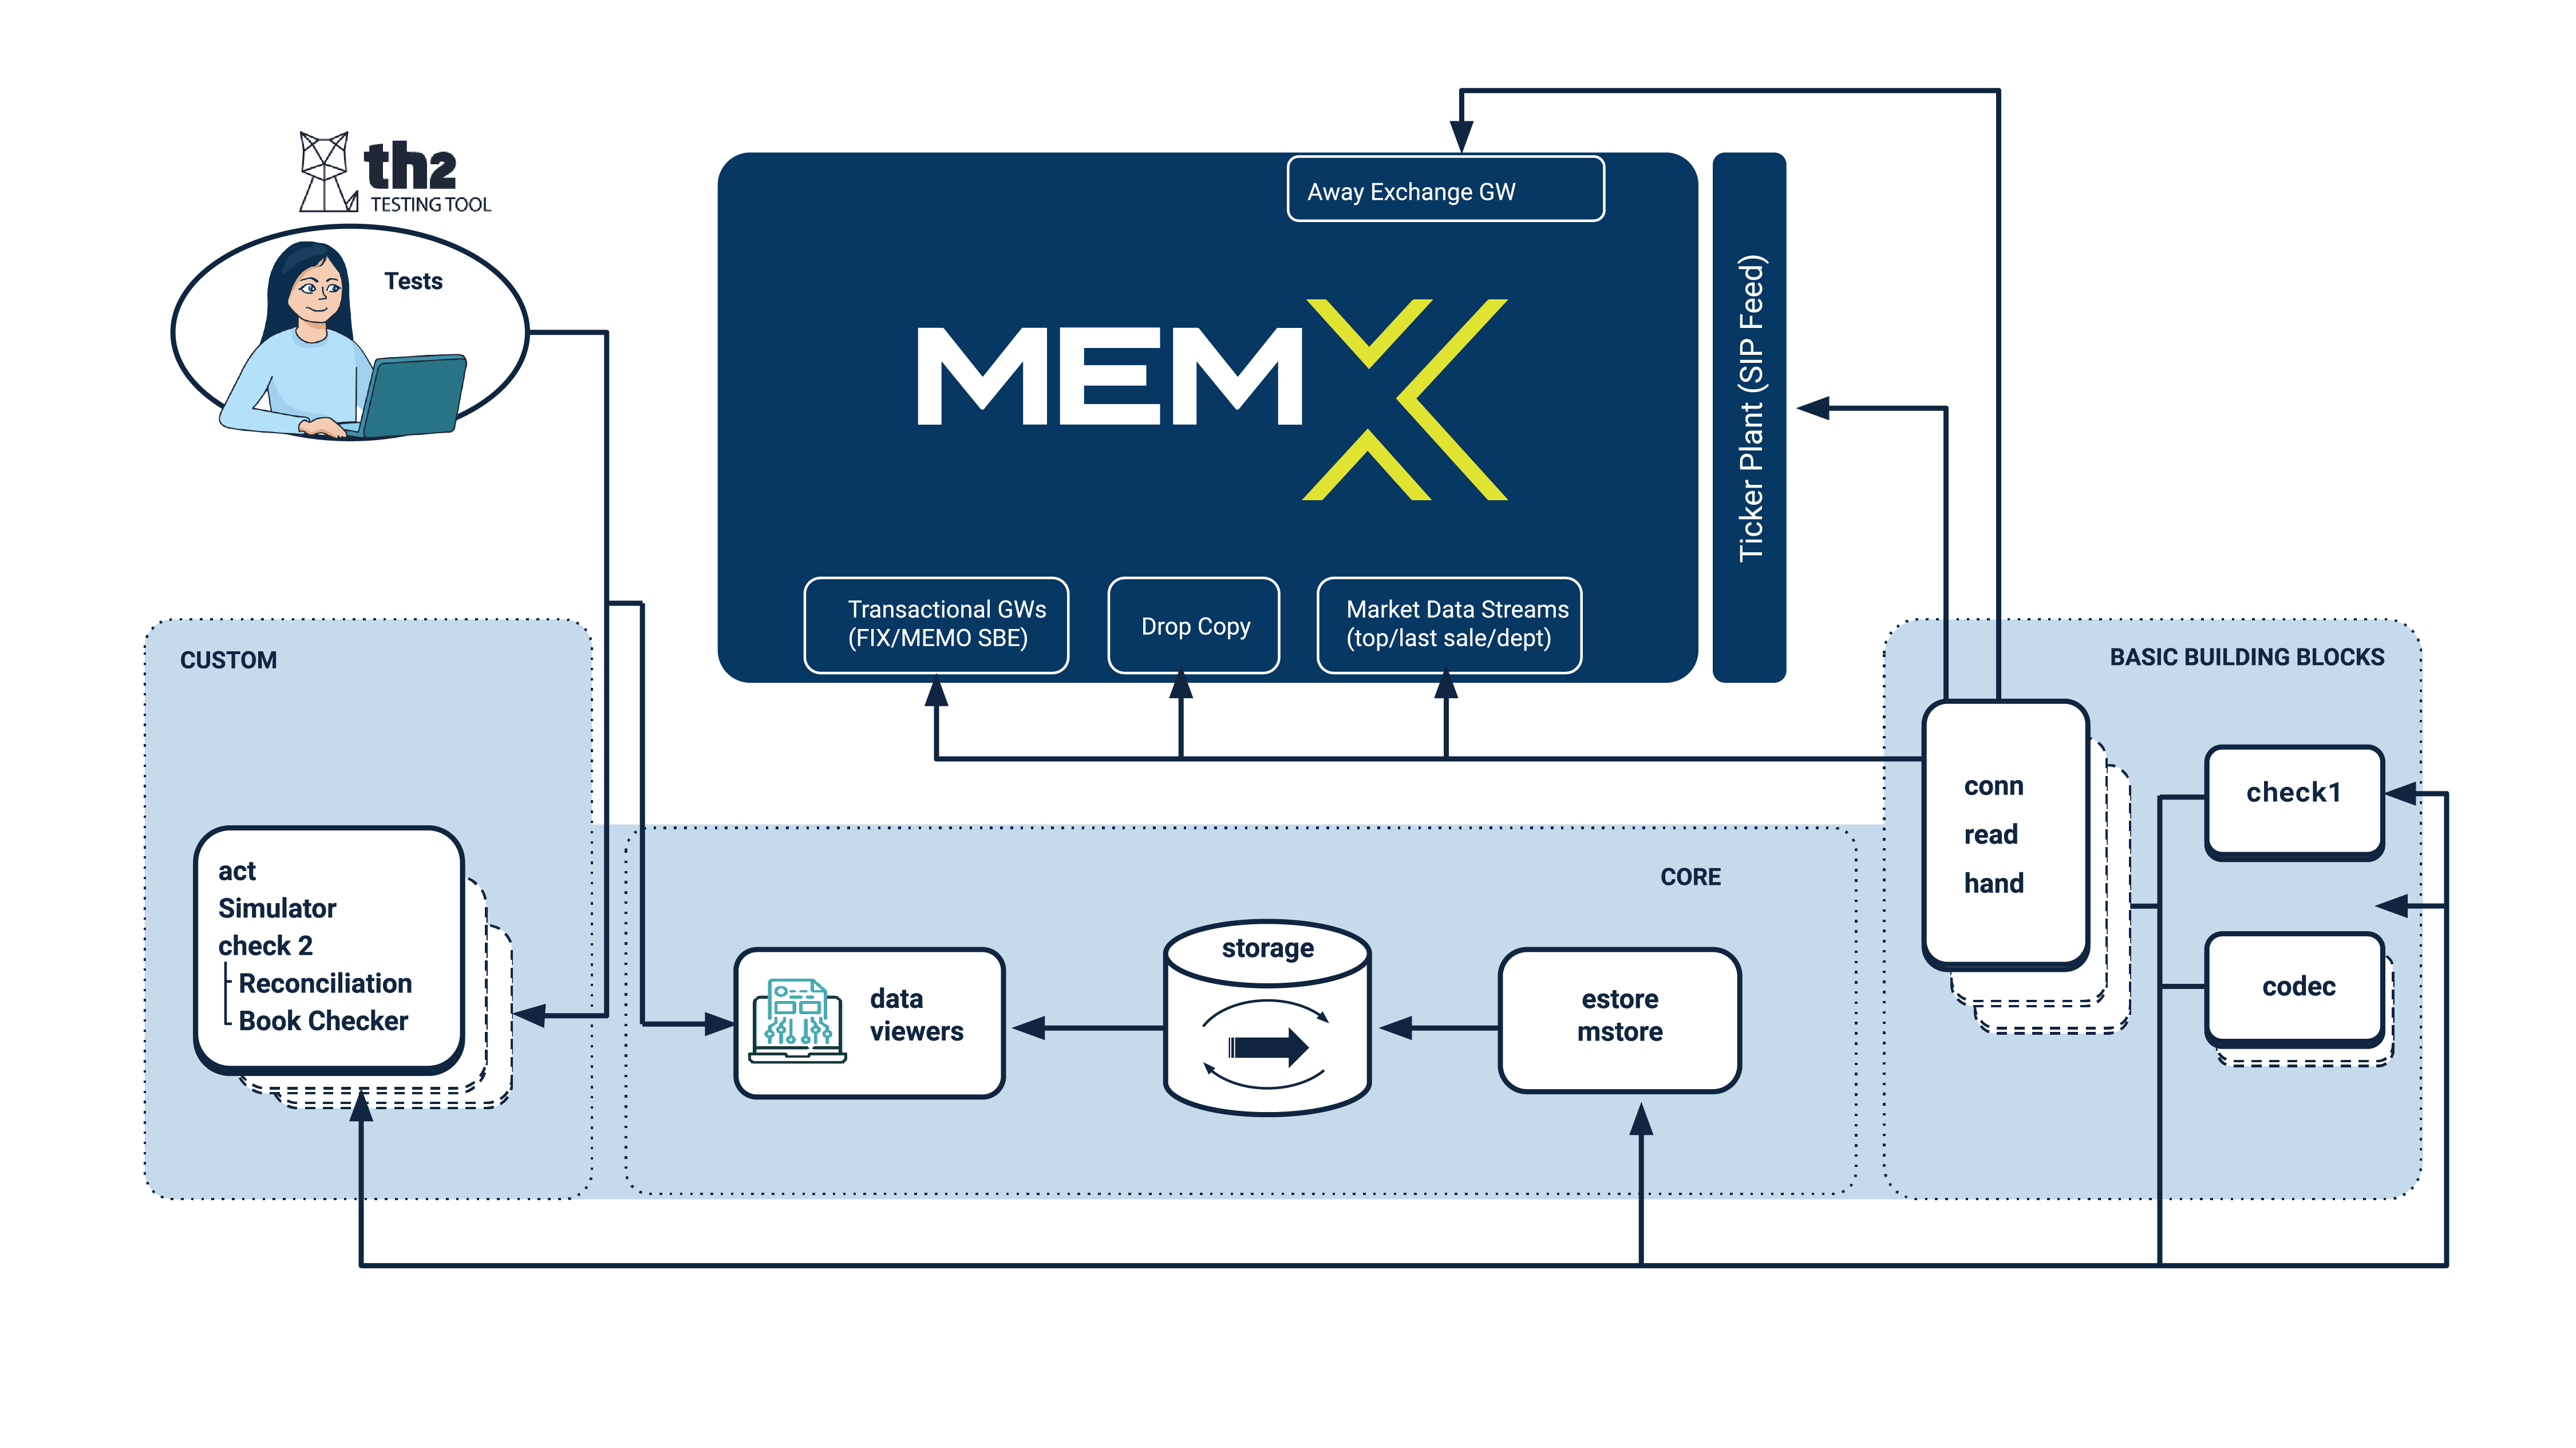 MEMX-Exactpro Collaboration on Exchange Quality Assurance